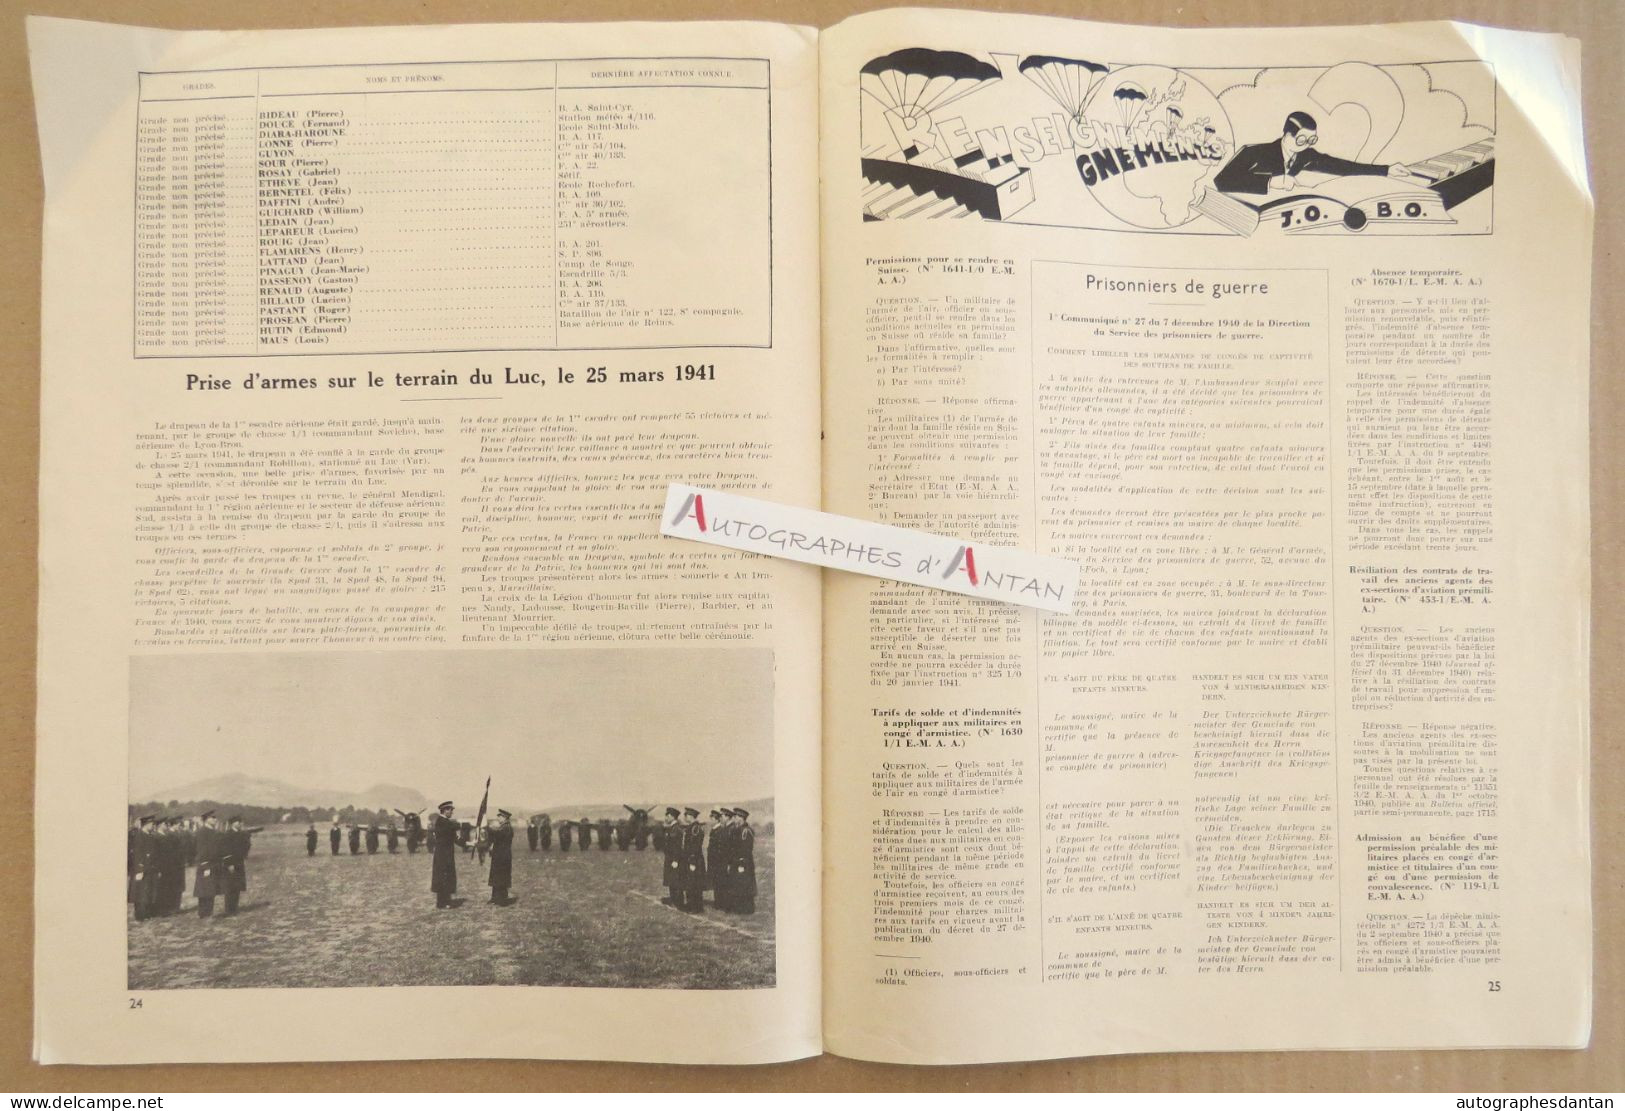 ● TRAIT d'UNION Mai 1941 organe mensuel du secrétariat d'Etat à l'Aviation - Hotel Radio Vichy - ww2 - cf 9 photos